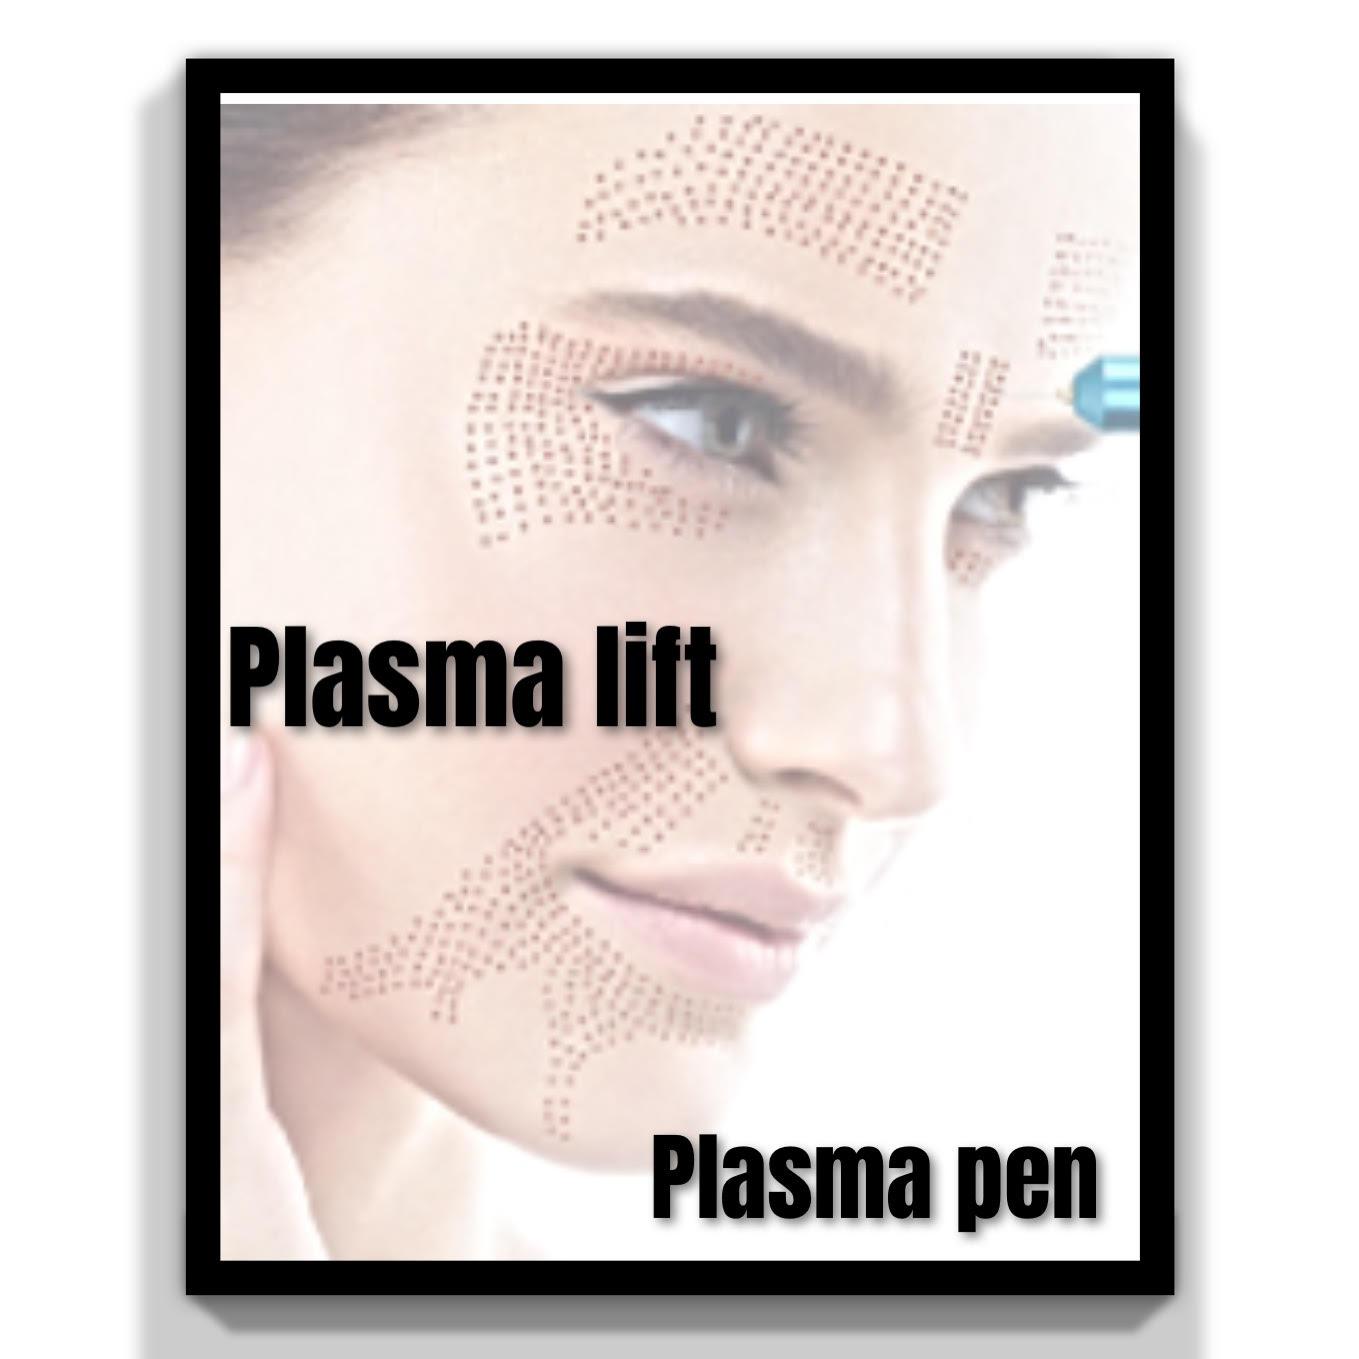 Plasma lift